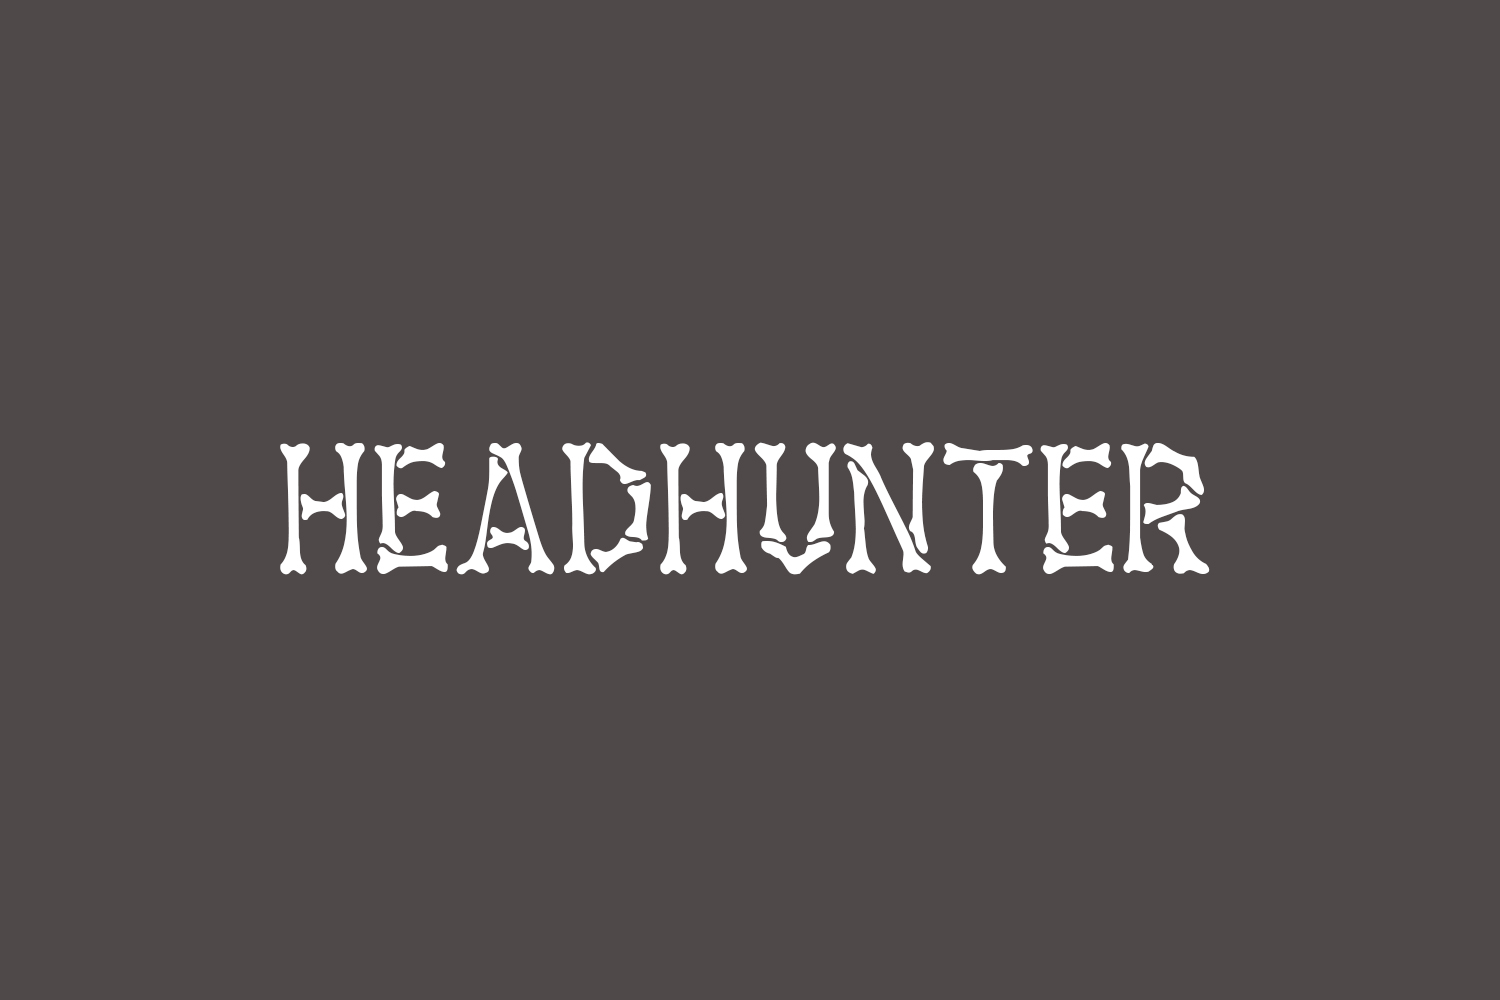 Headhunter